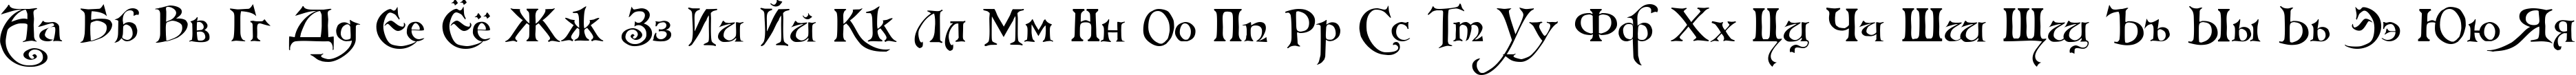 Пример написания русского алфавита шрифтом Arlekino